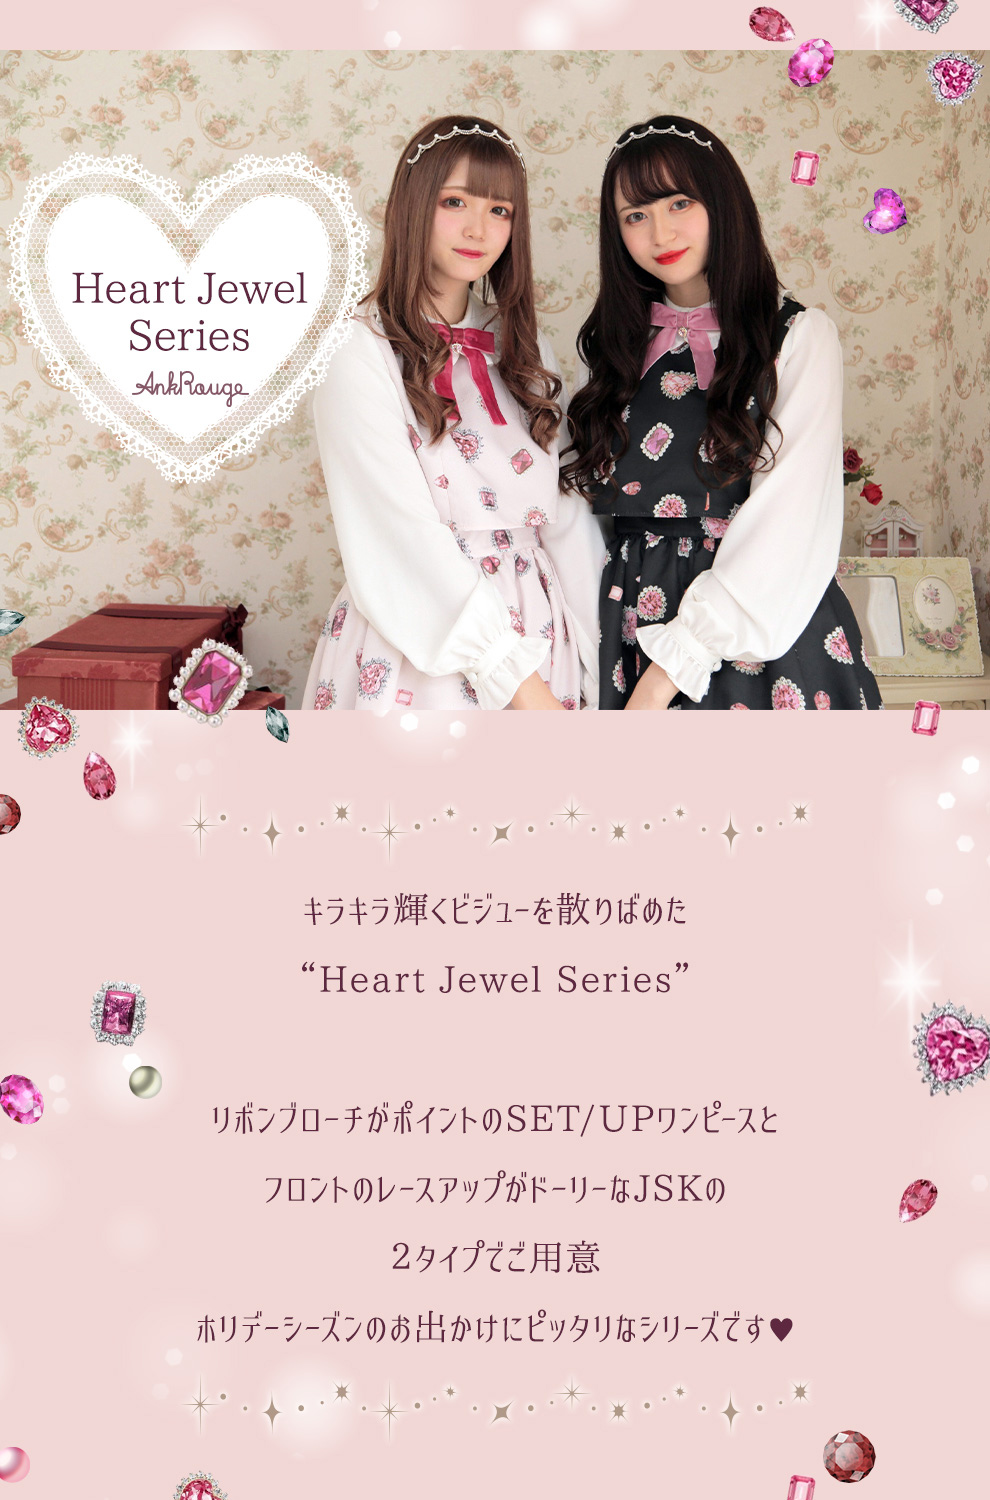 Heart Jewel Series